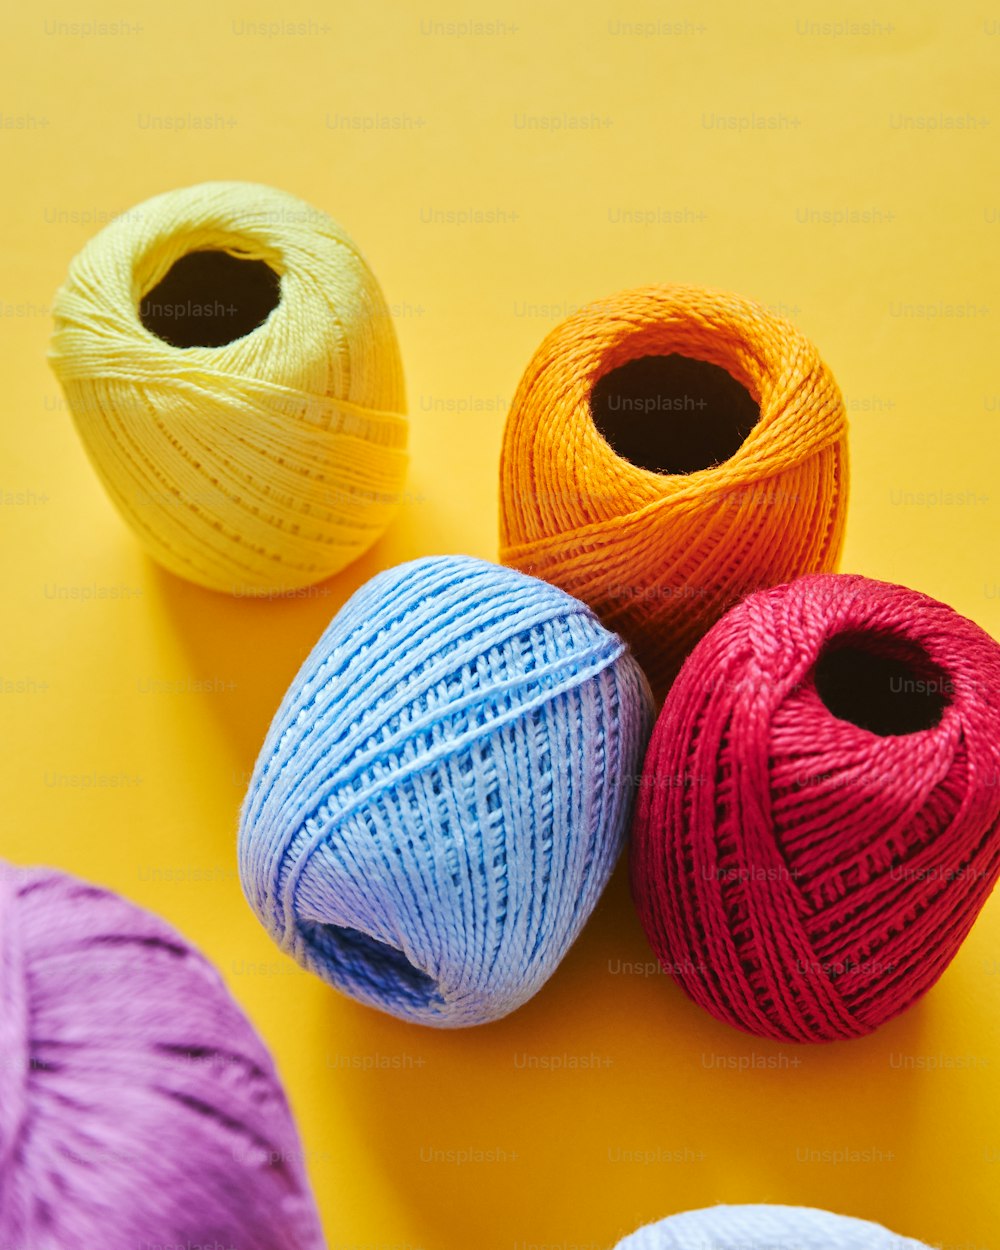 Yarn balls in row Stock Photo by ©ivanmateev 62110323